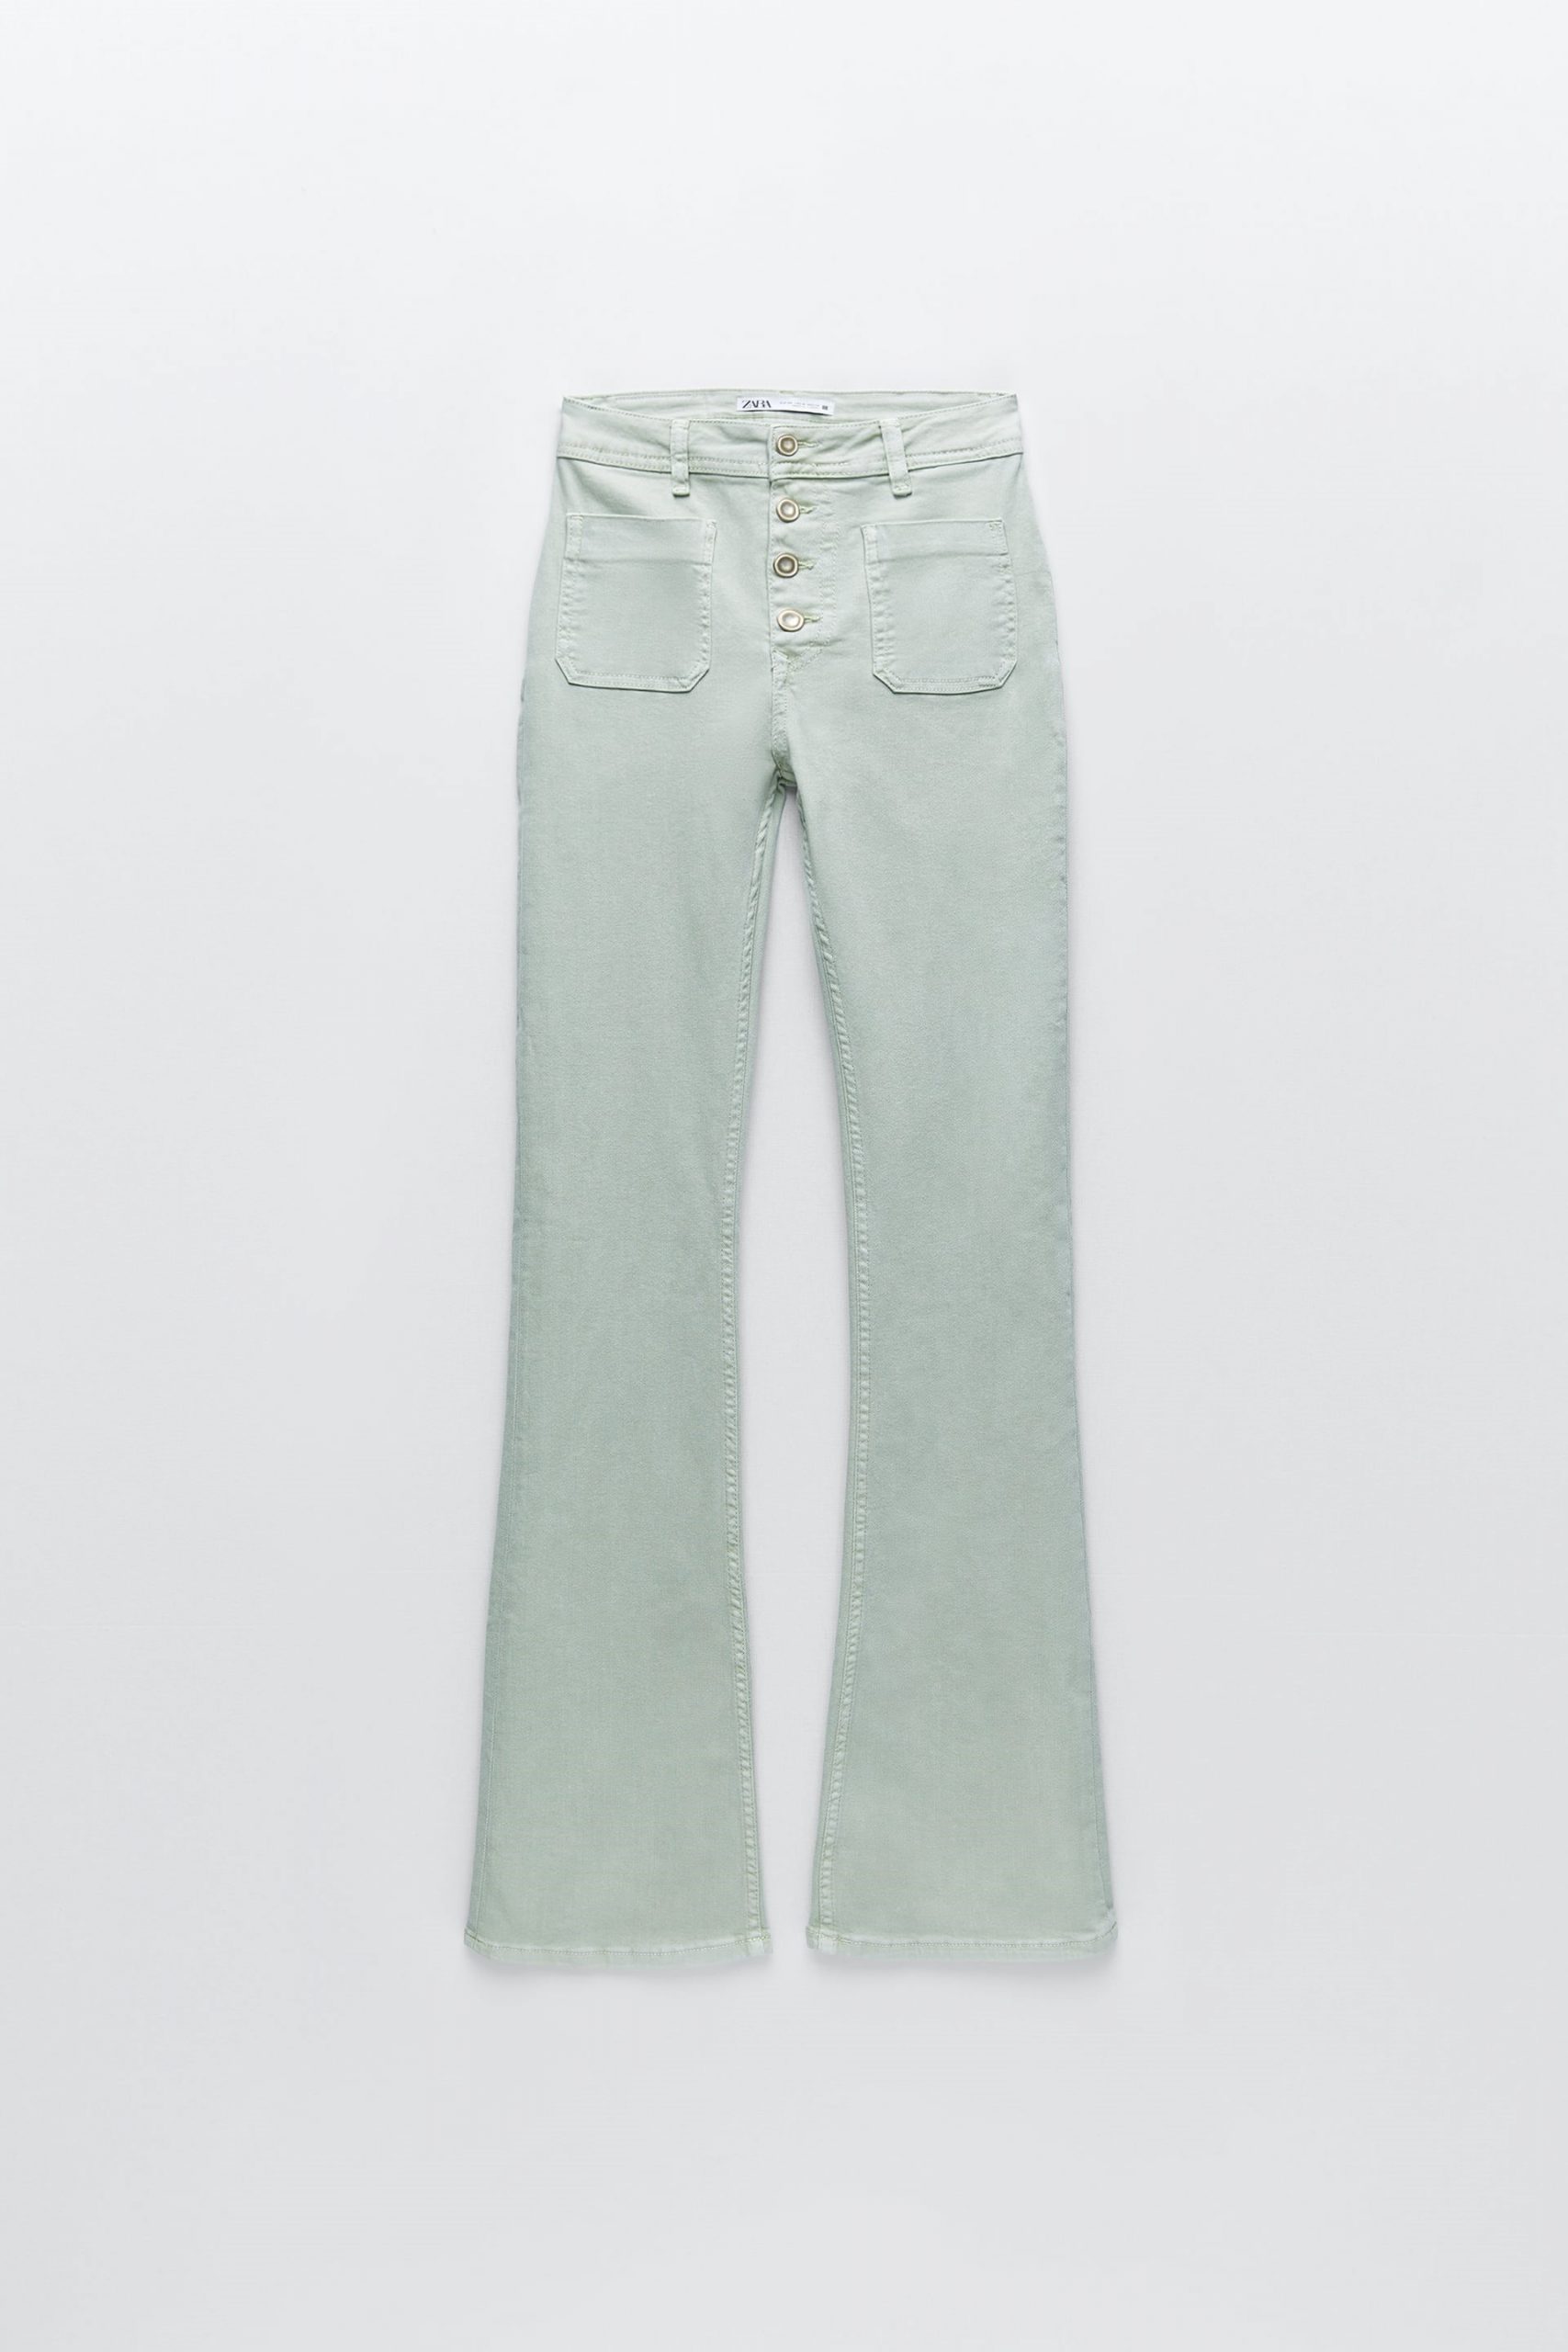 Jeans Z1975 flare, de Zara (25,95€)